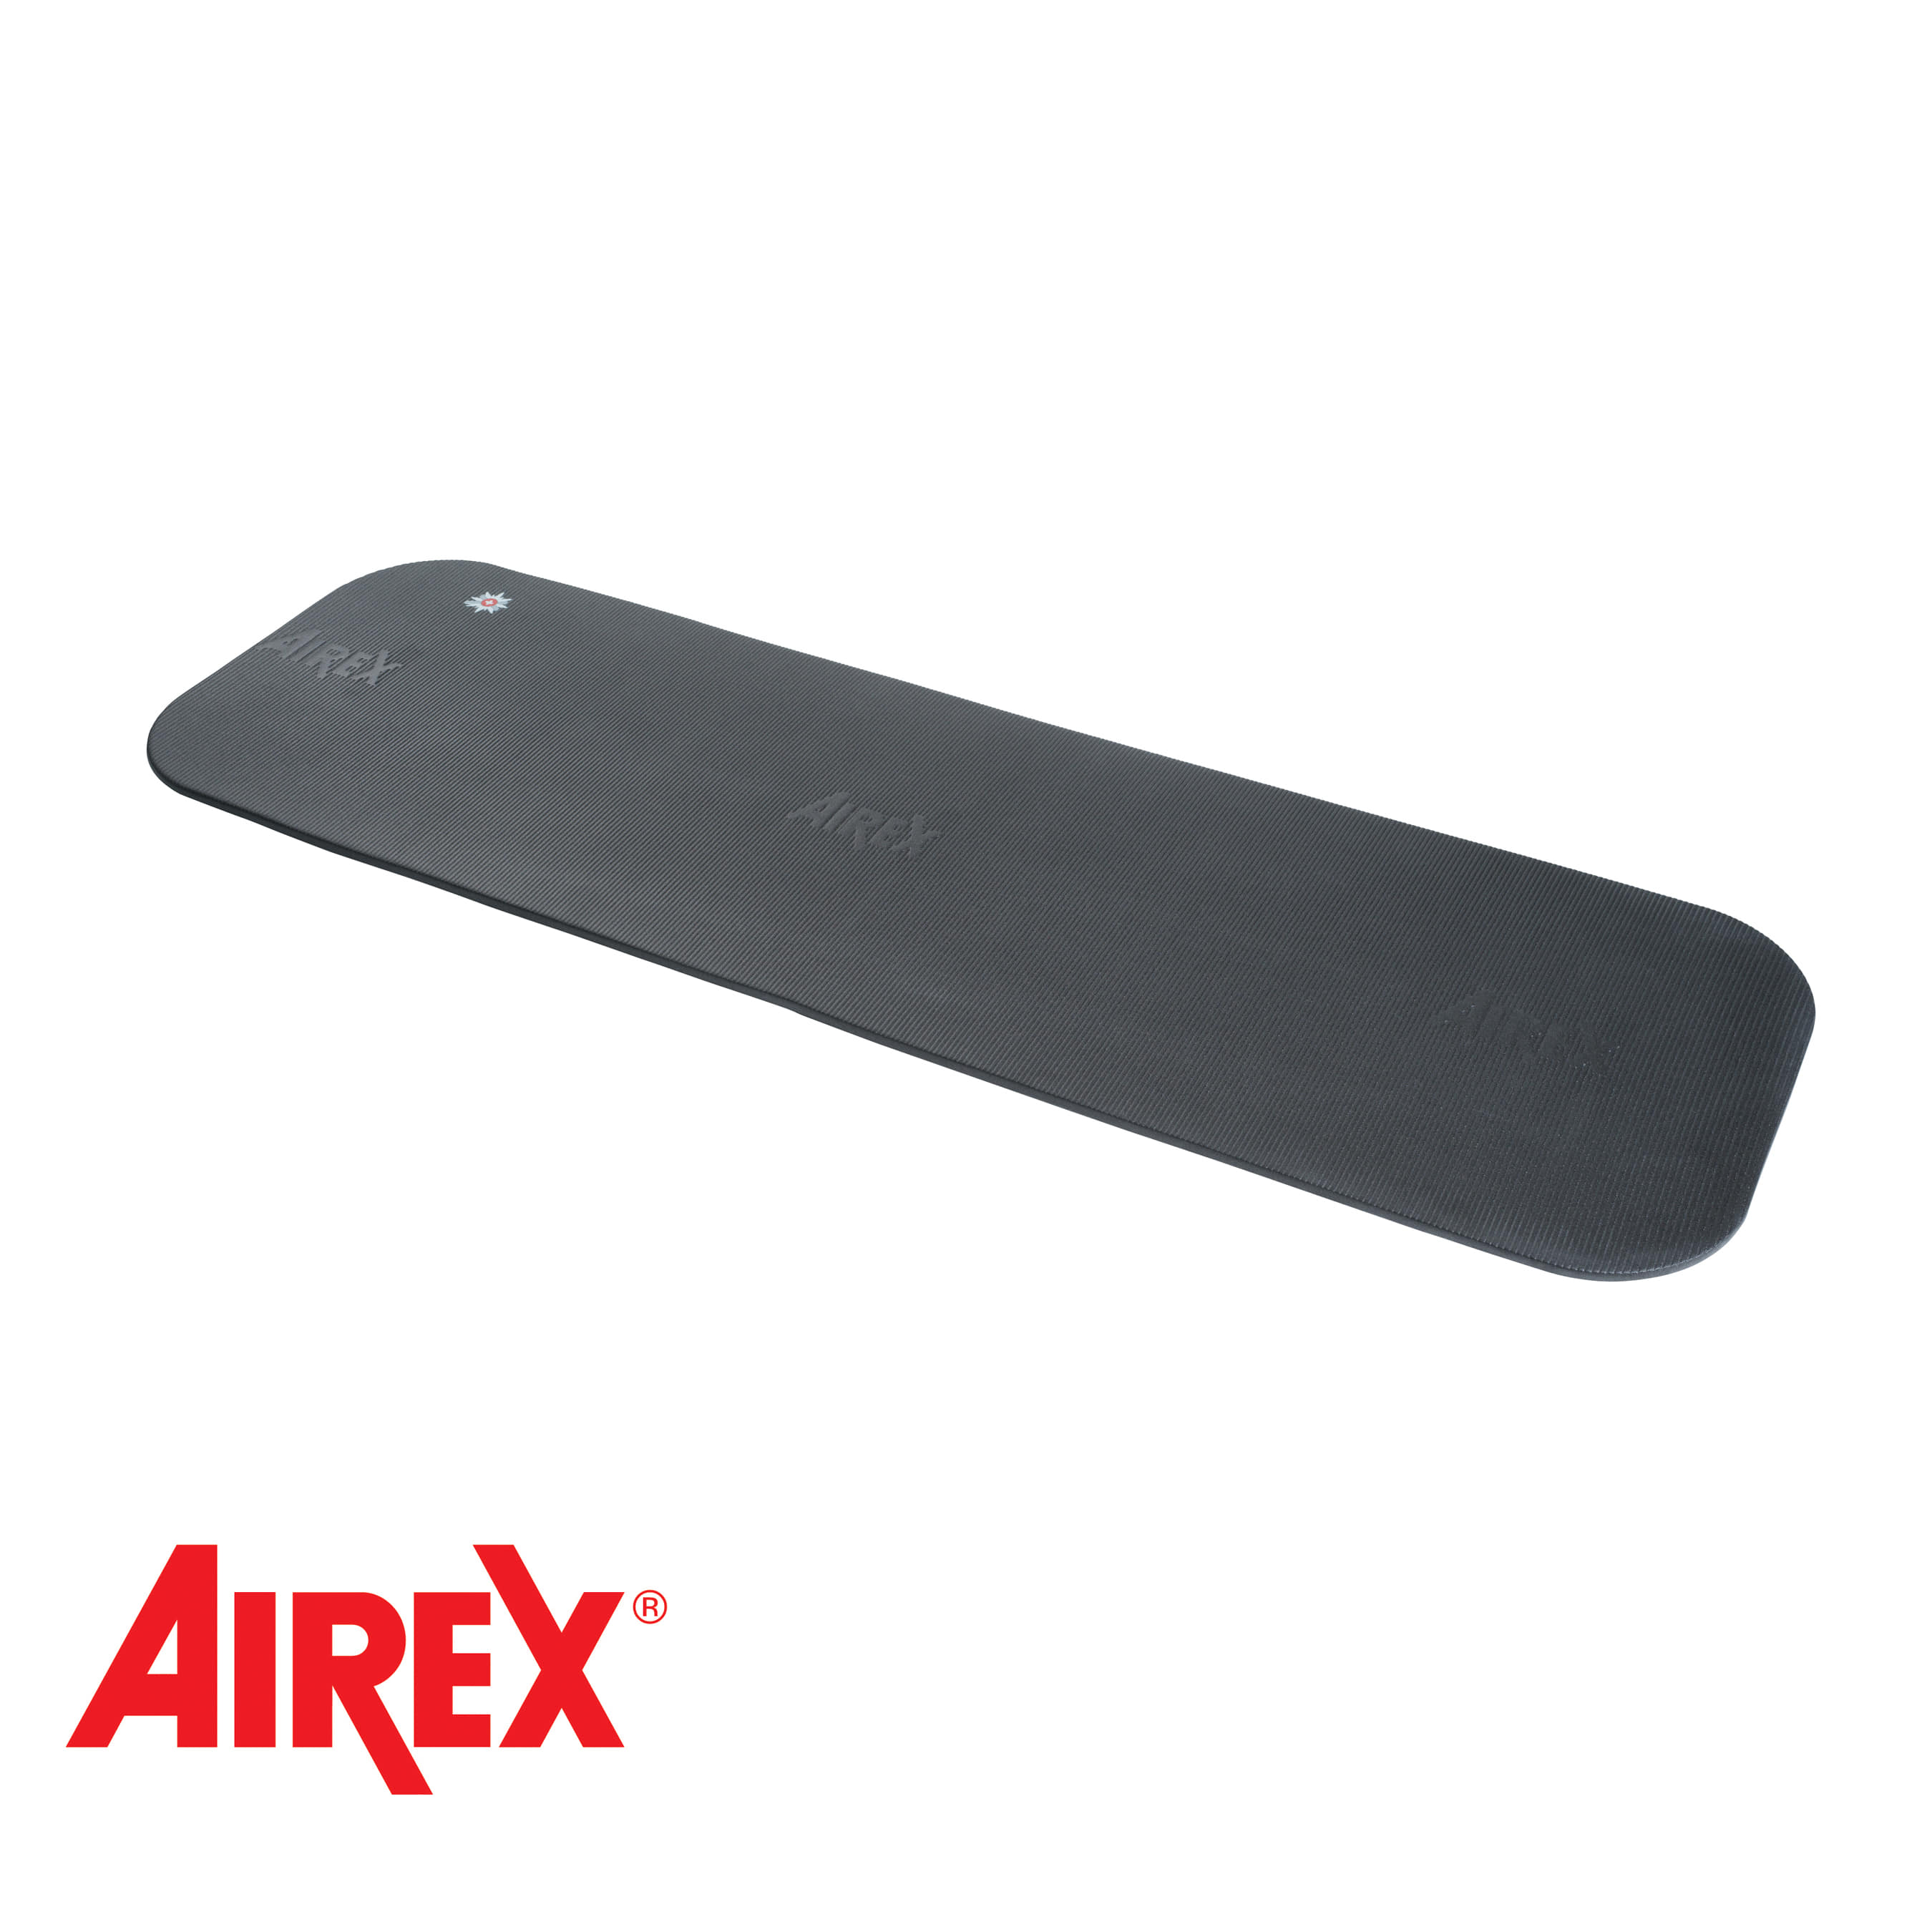 Airex® Coronalla 200 Mat Charcoal